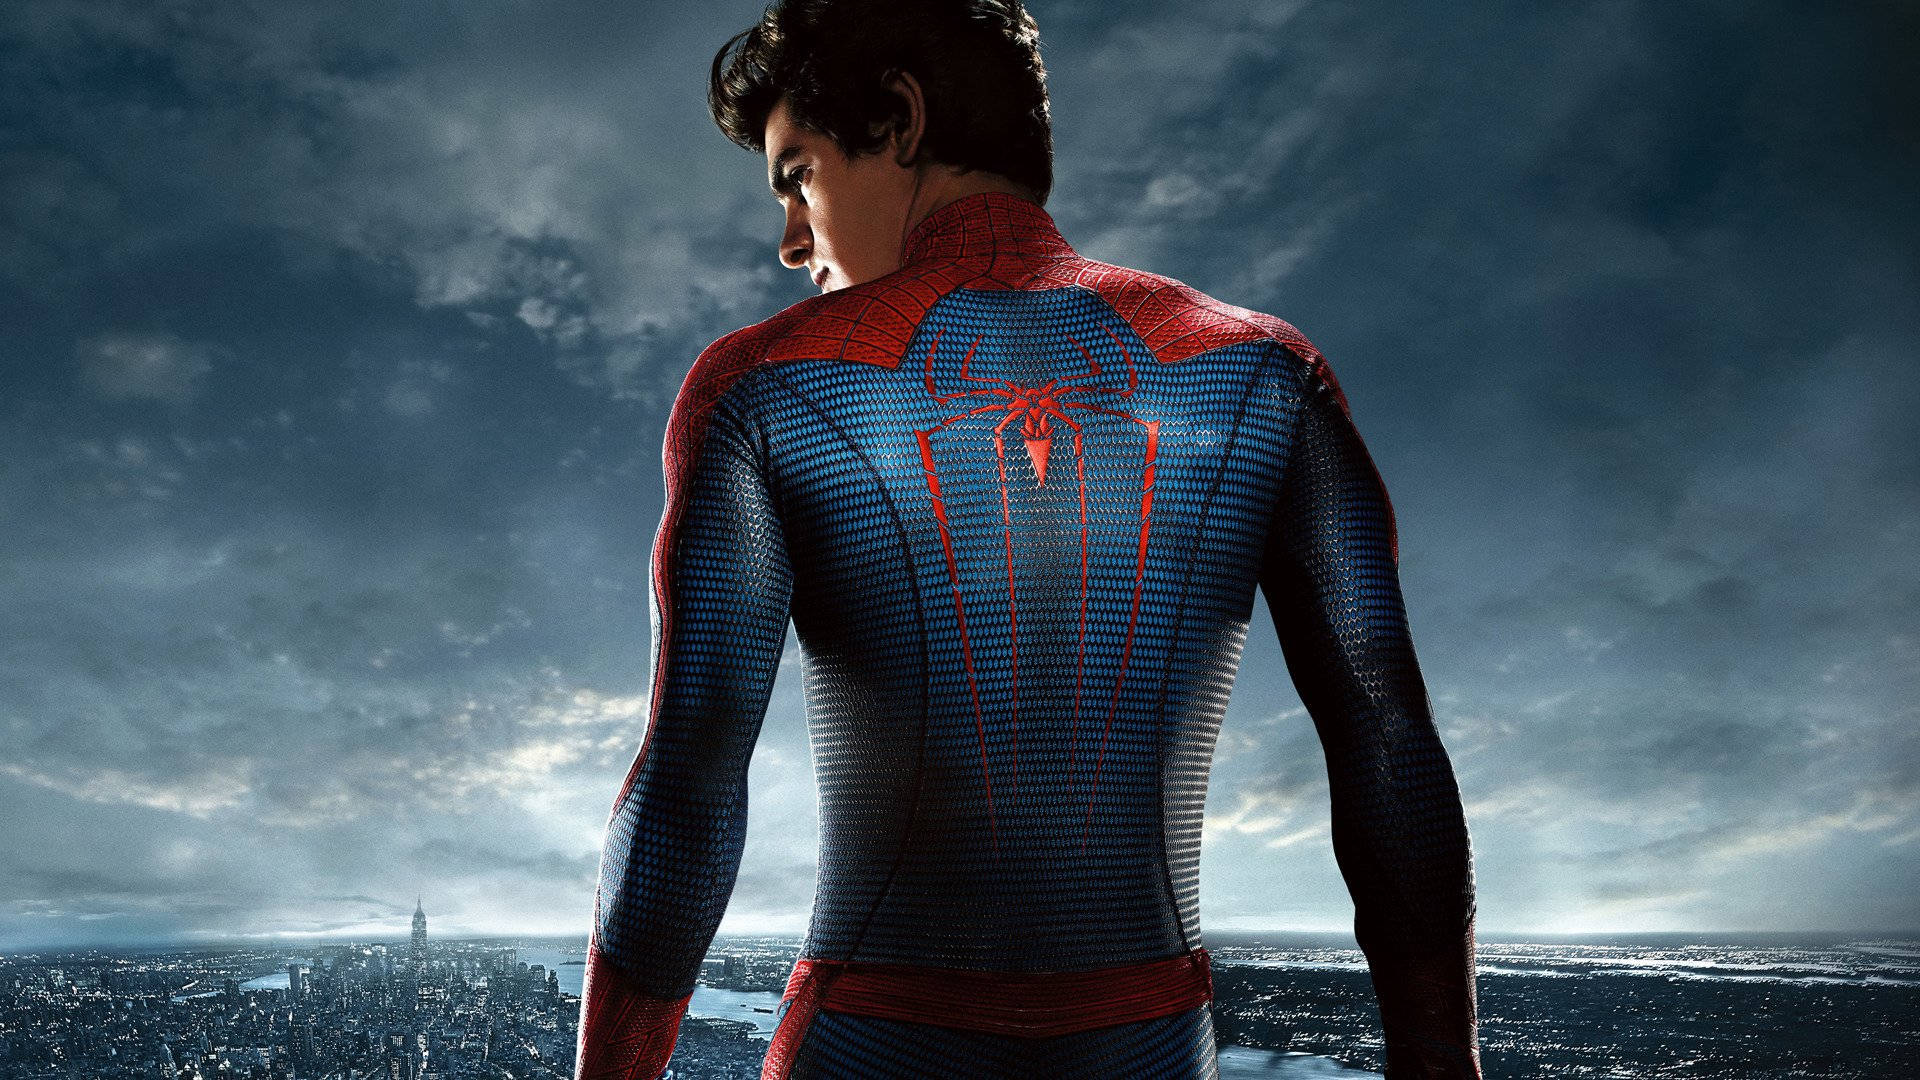 Andrew Garfield The Amazing Spider-Man Wallpaper